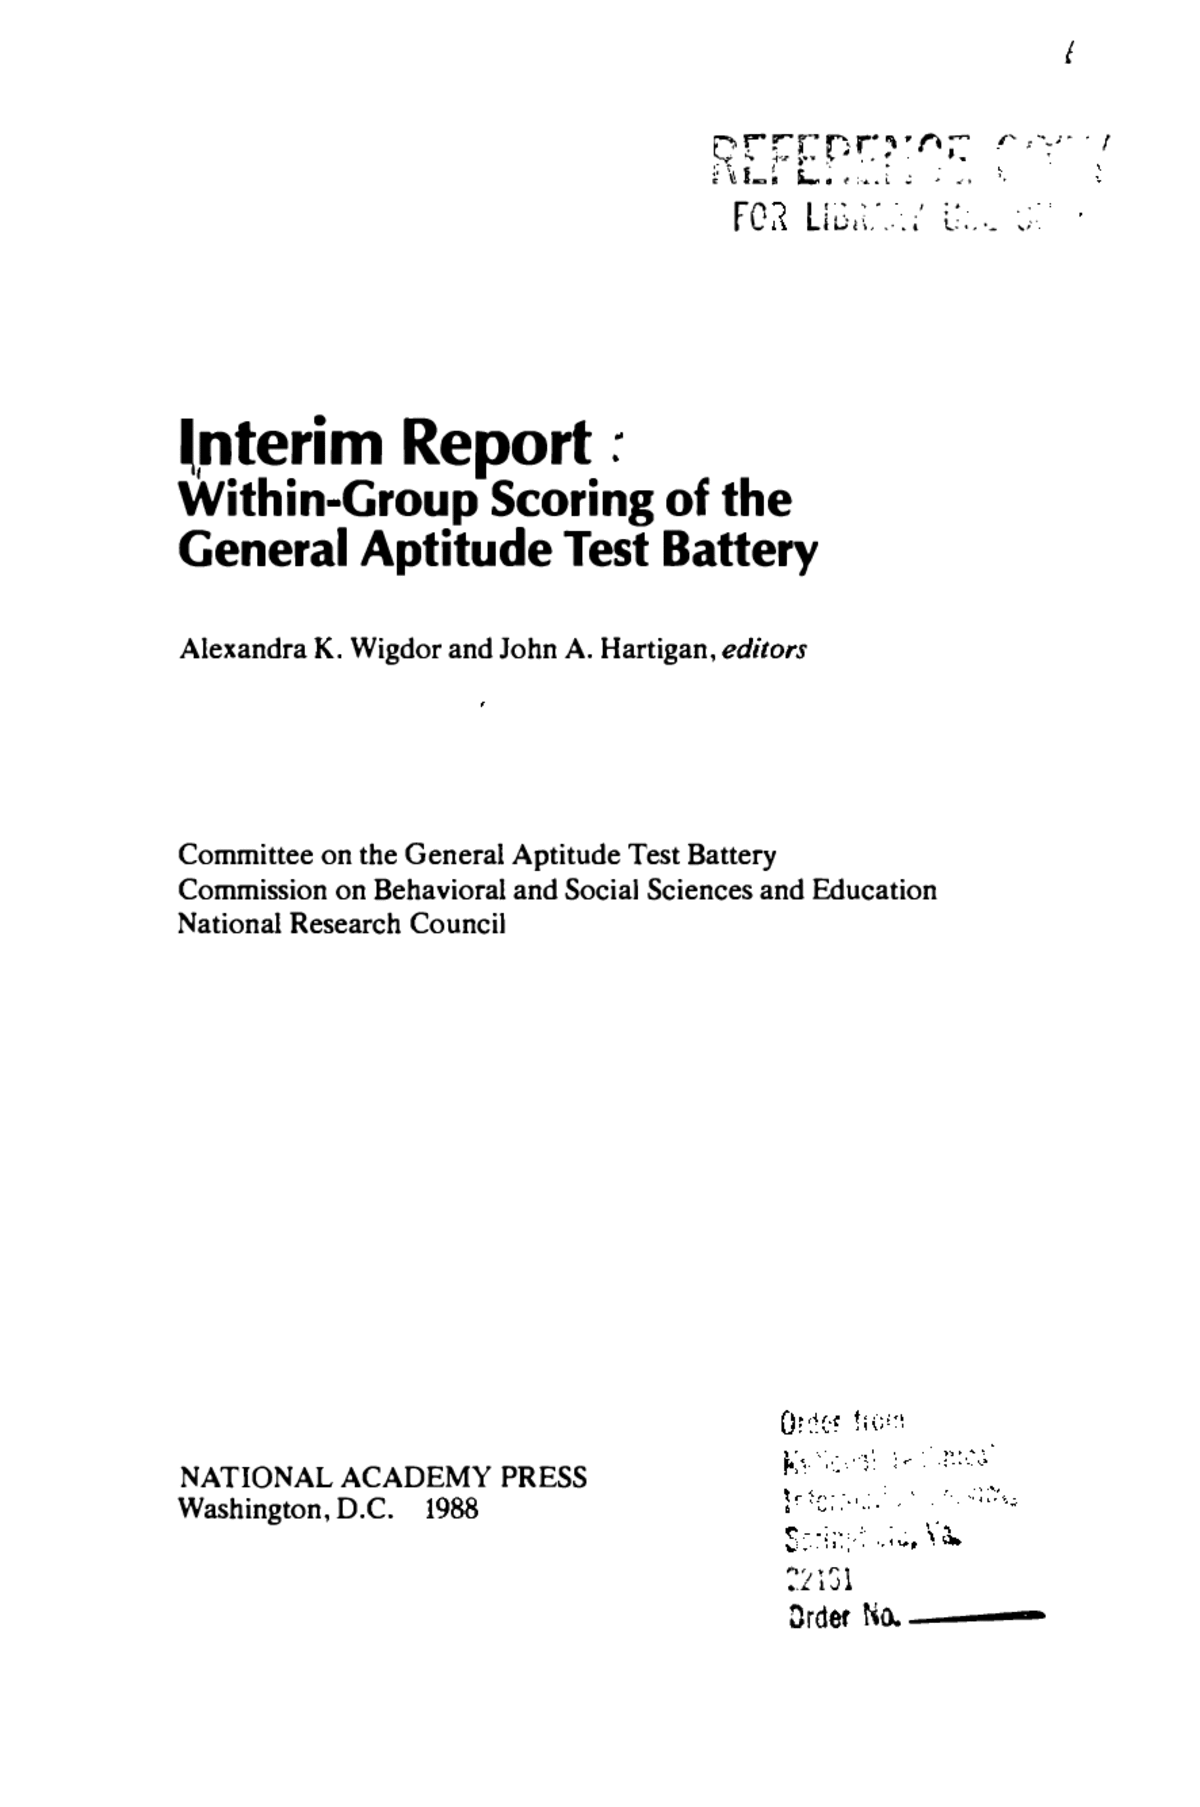 pdf-general-aptitude-test-battery-kurt-f-geisinger-academia-edu